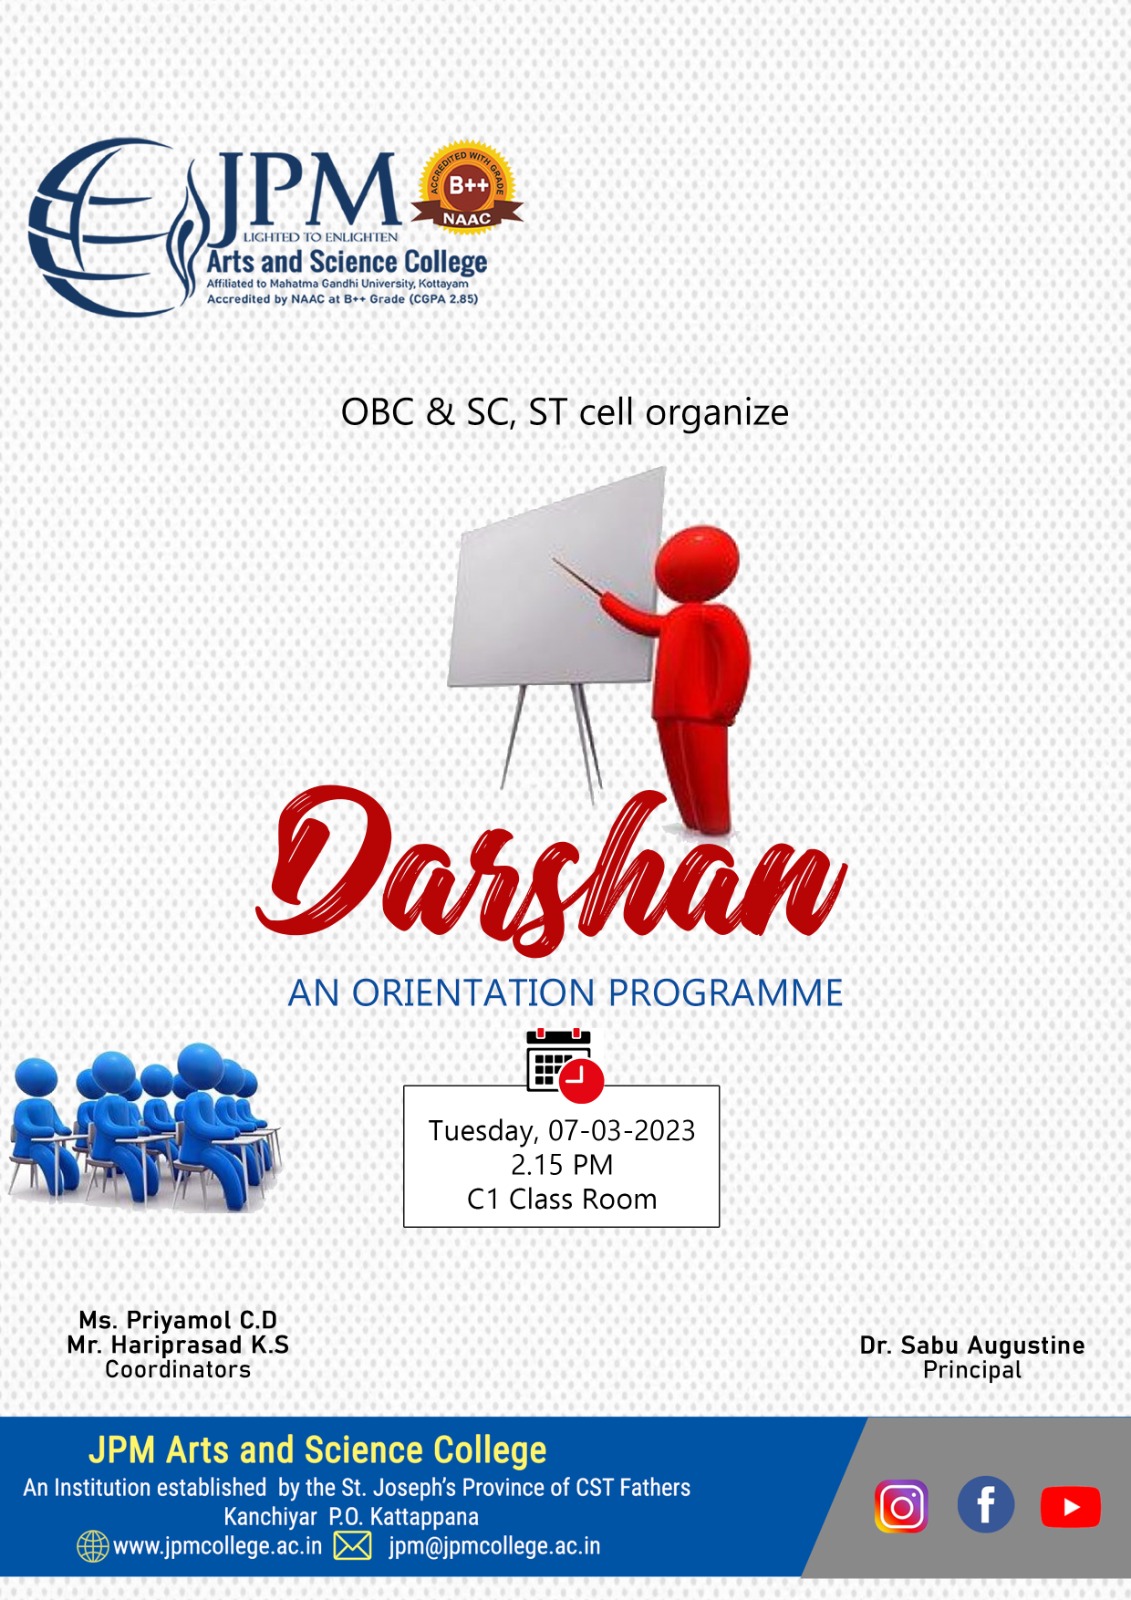 Darshan - An orientation programme 